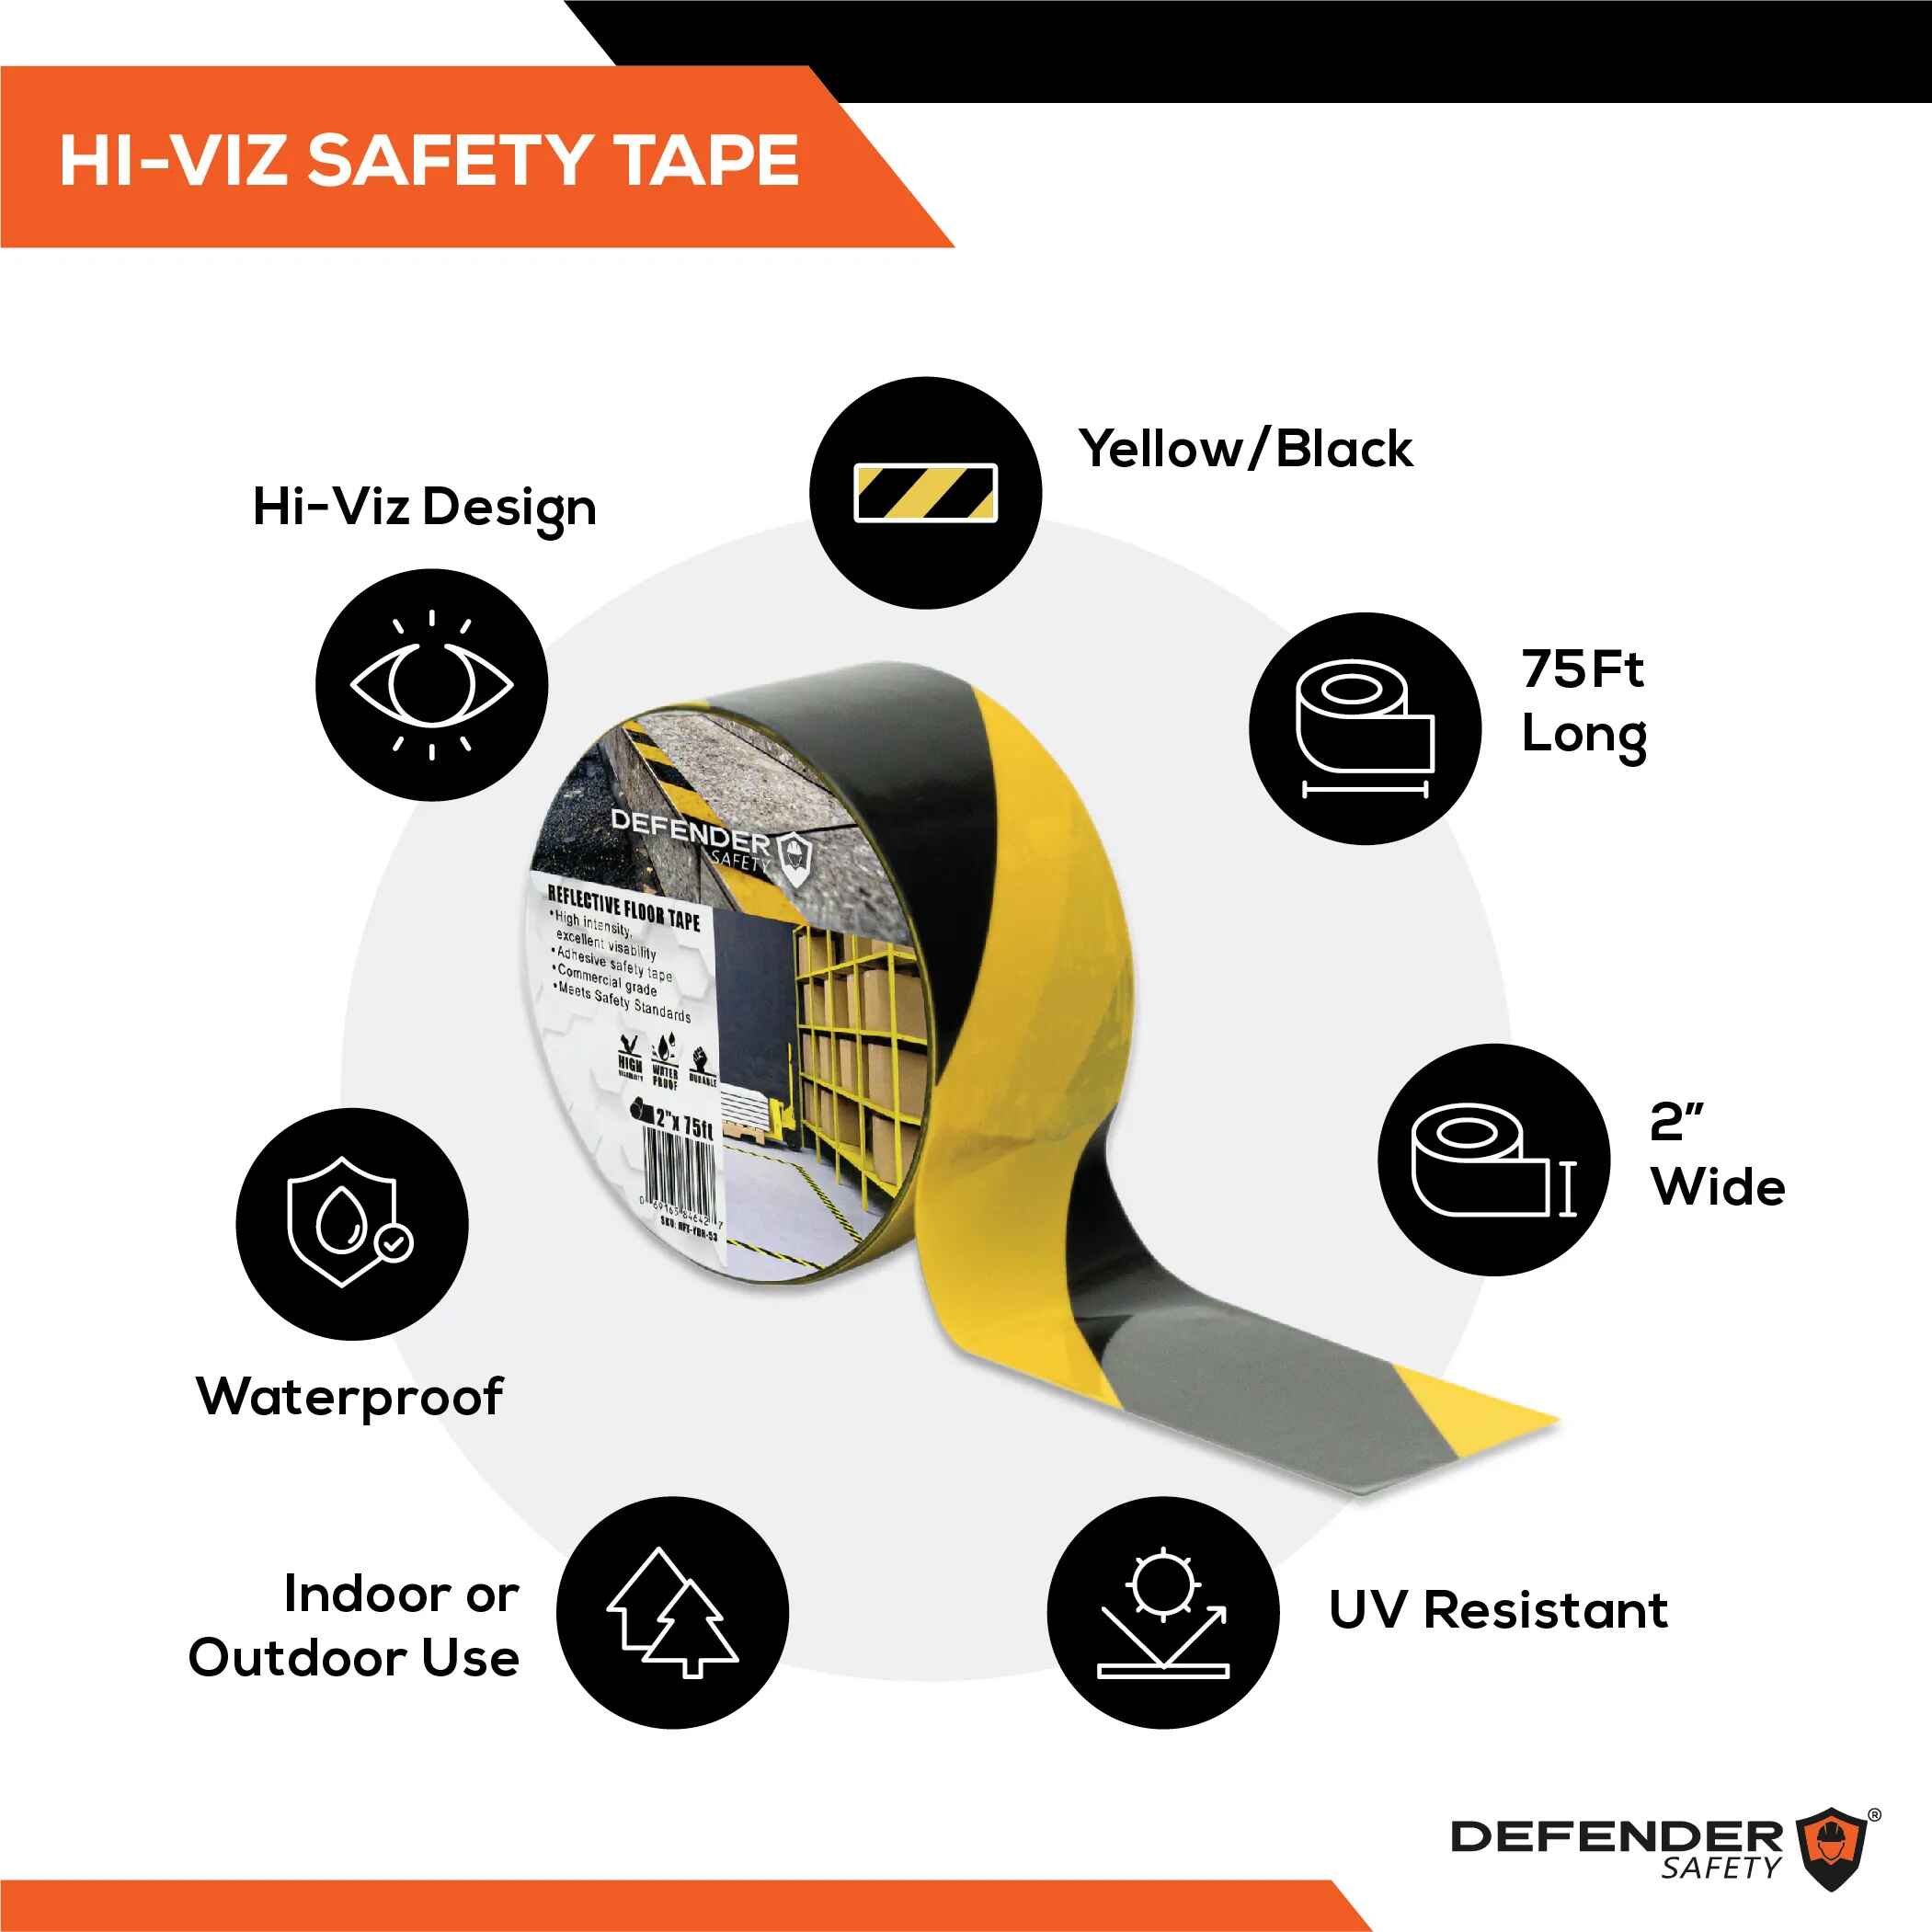 Hi-Viz Adhesive Floor Tape. 2"x 75' Yellow and Black. - Defender Safety